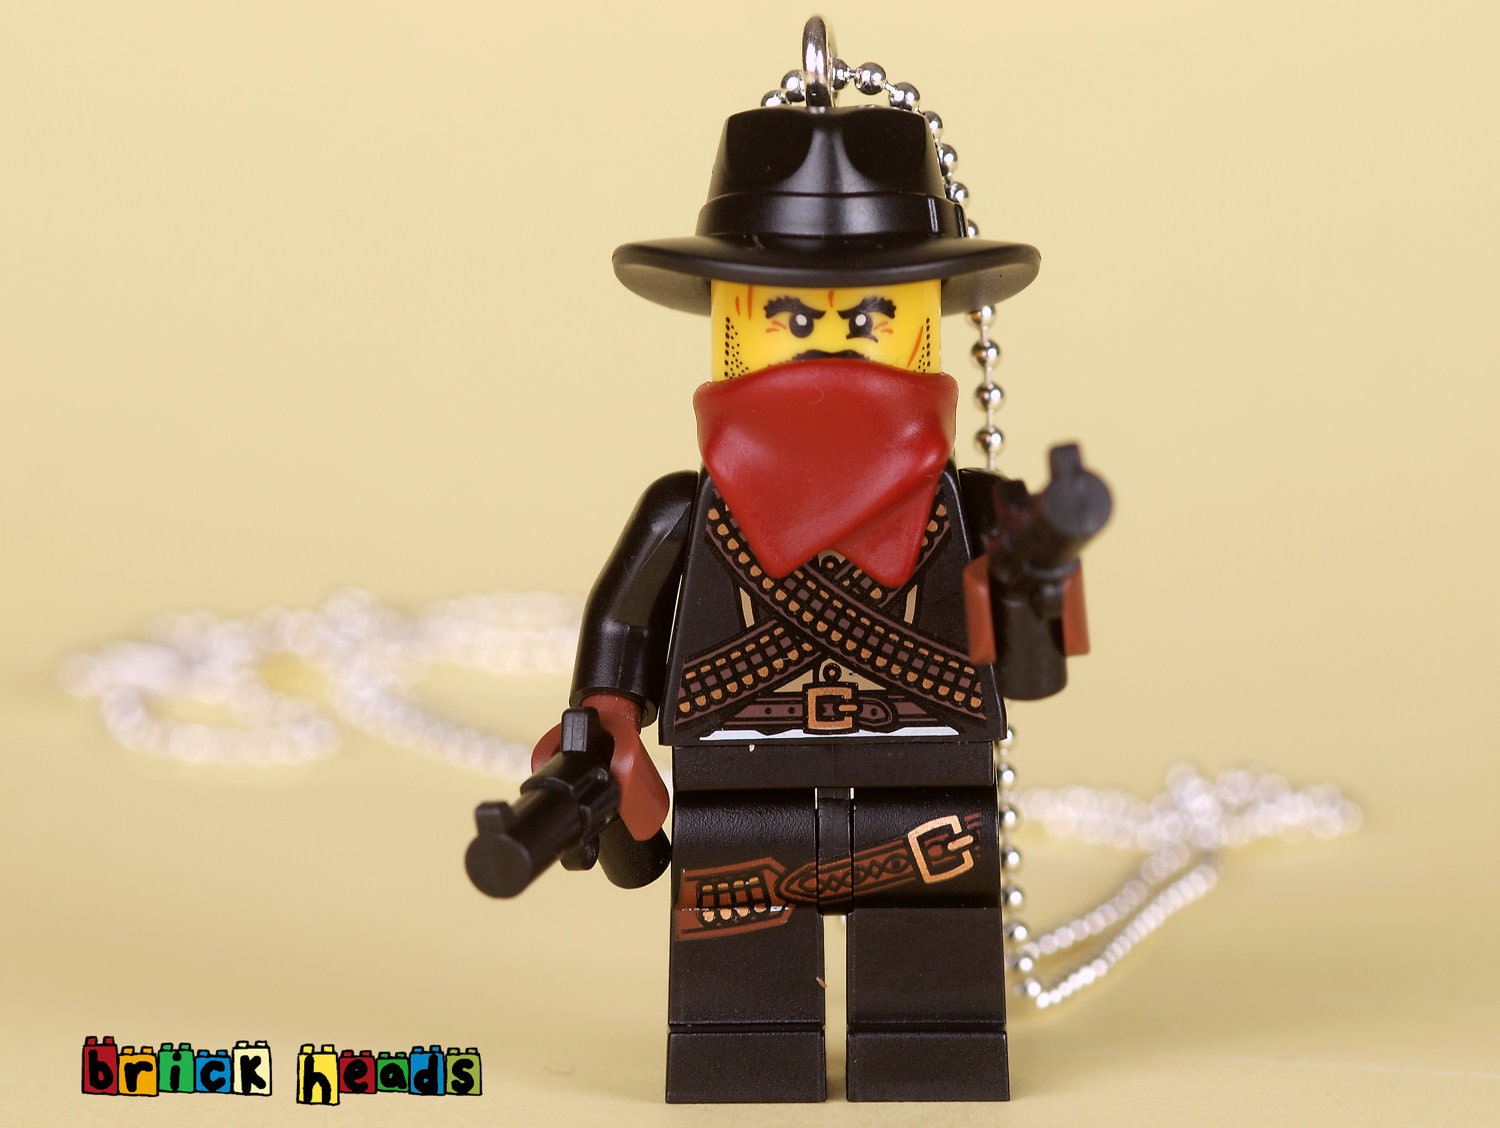 bandit-cowboy-lego-minifigure-necklace-by-brickheads-on-etsy